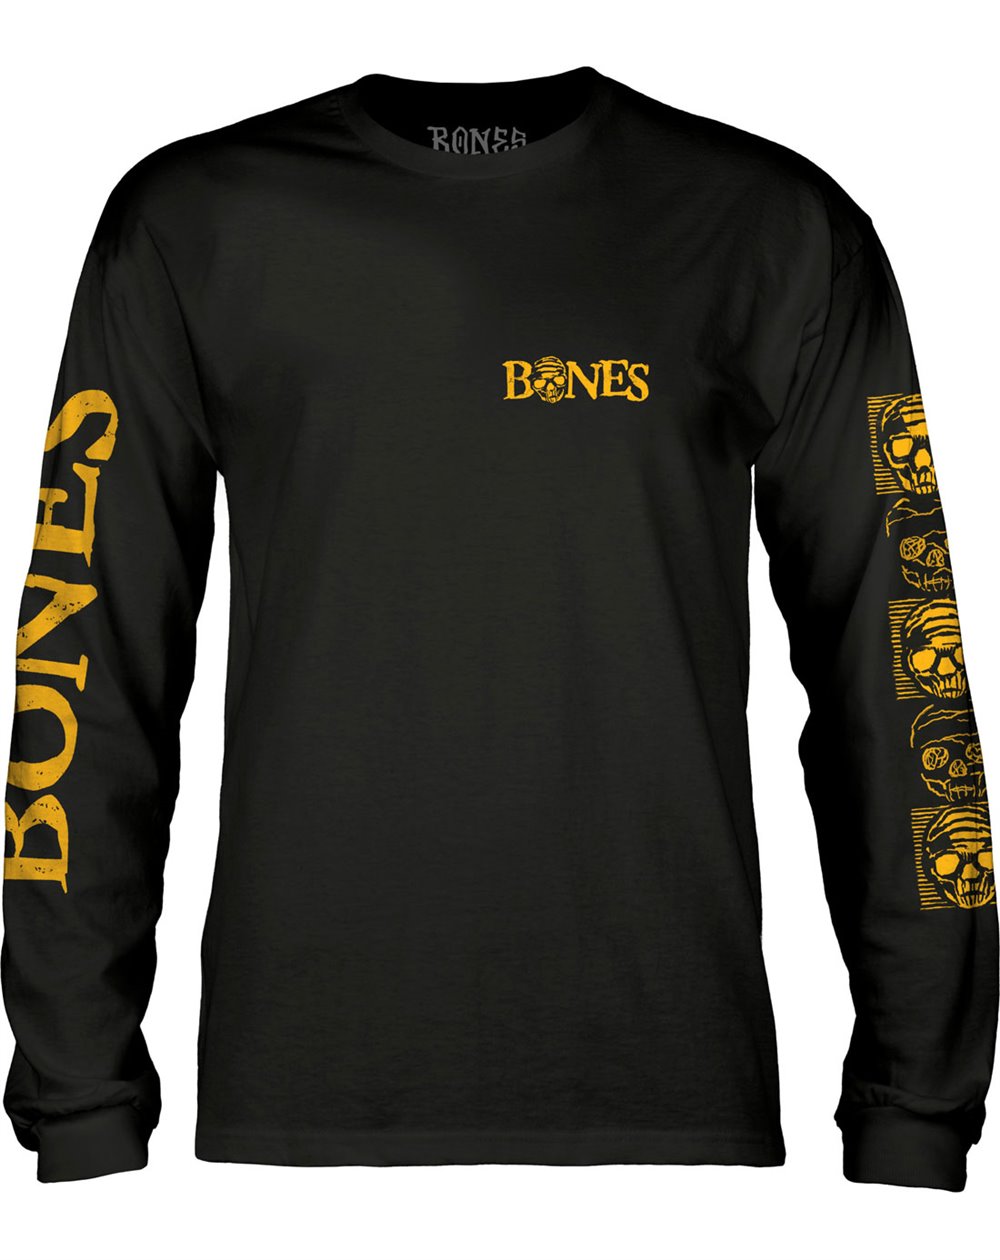 Bones Wheels Black & Gold Long Sleeve Top for Men